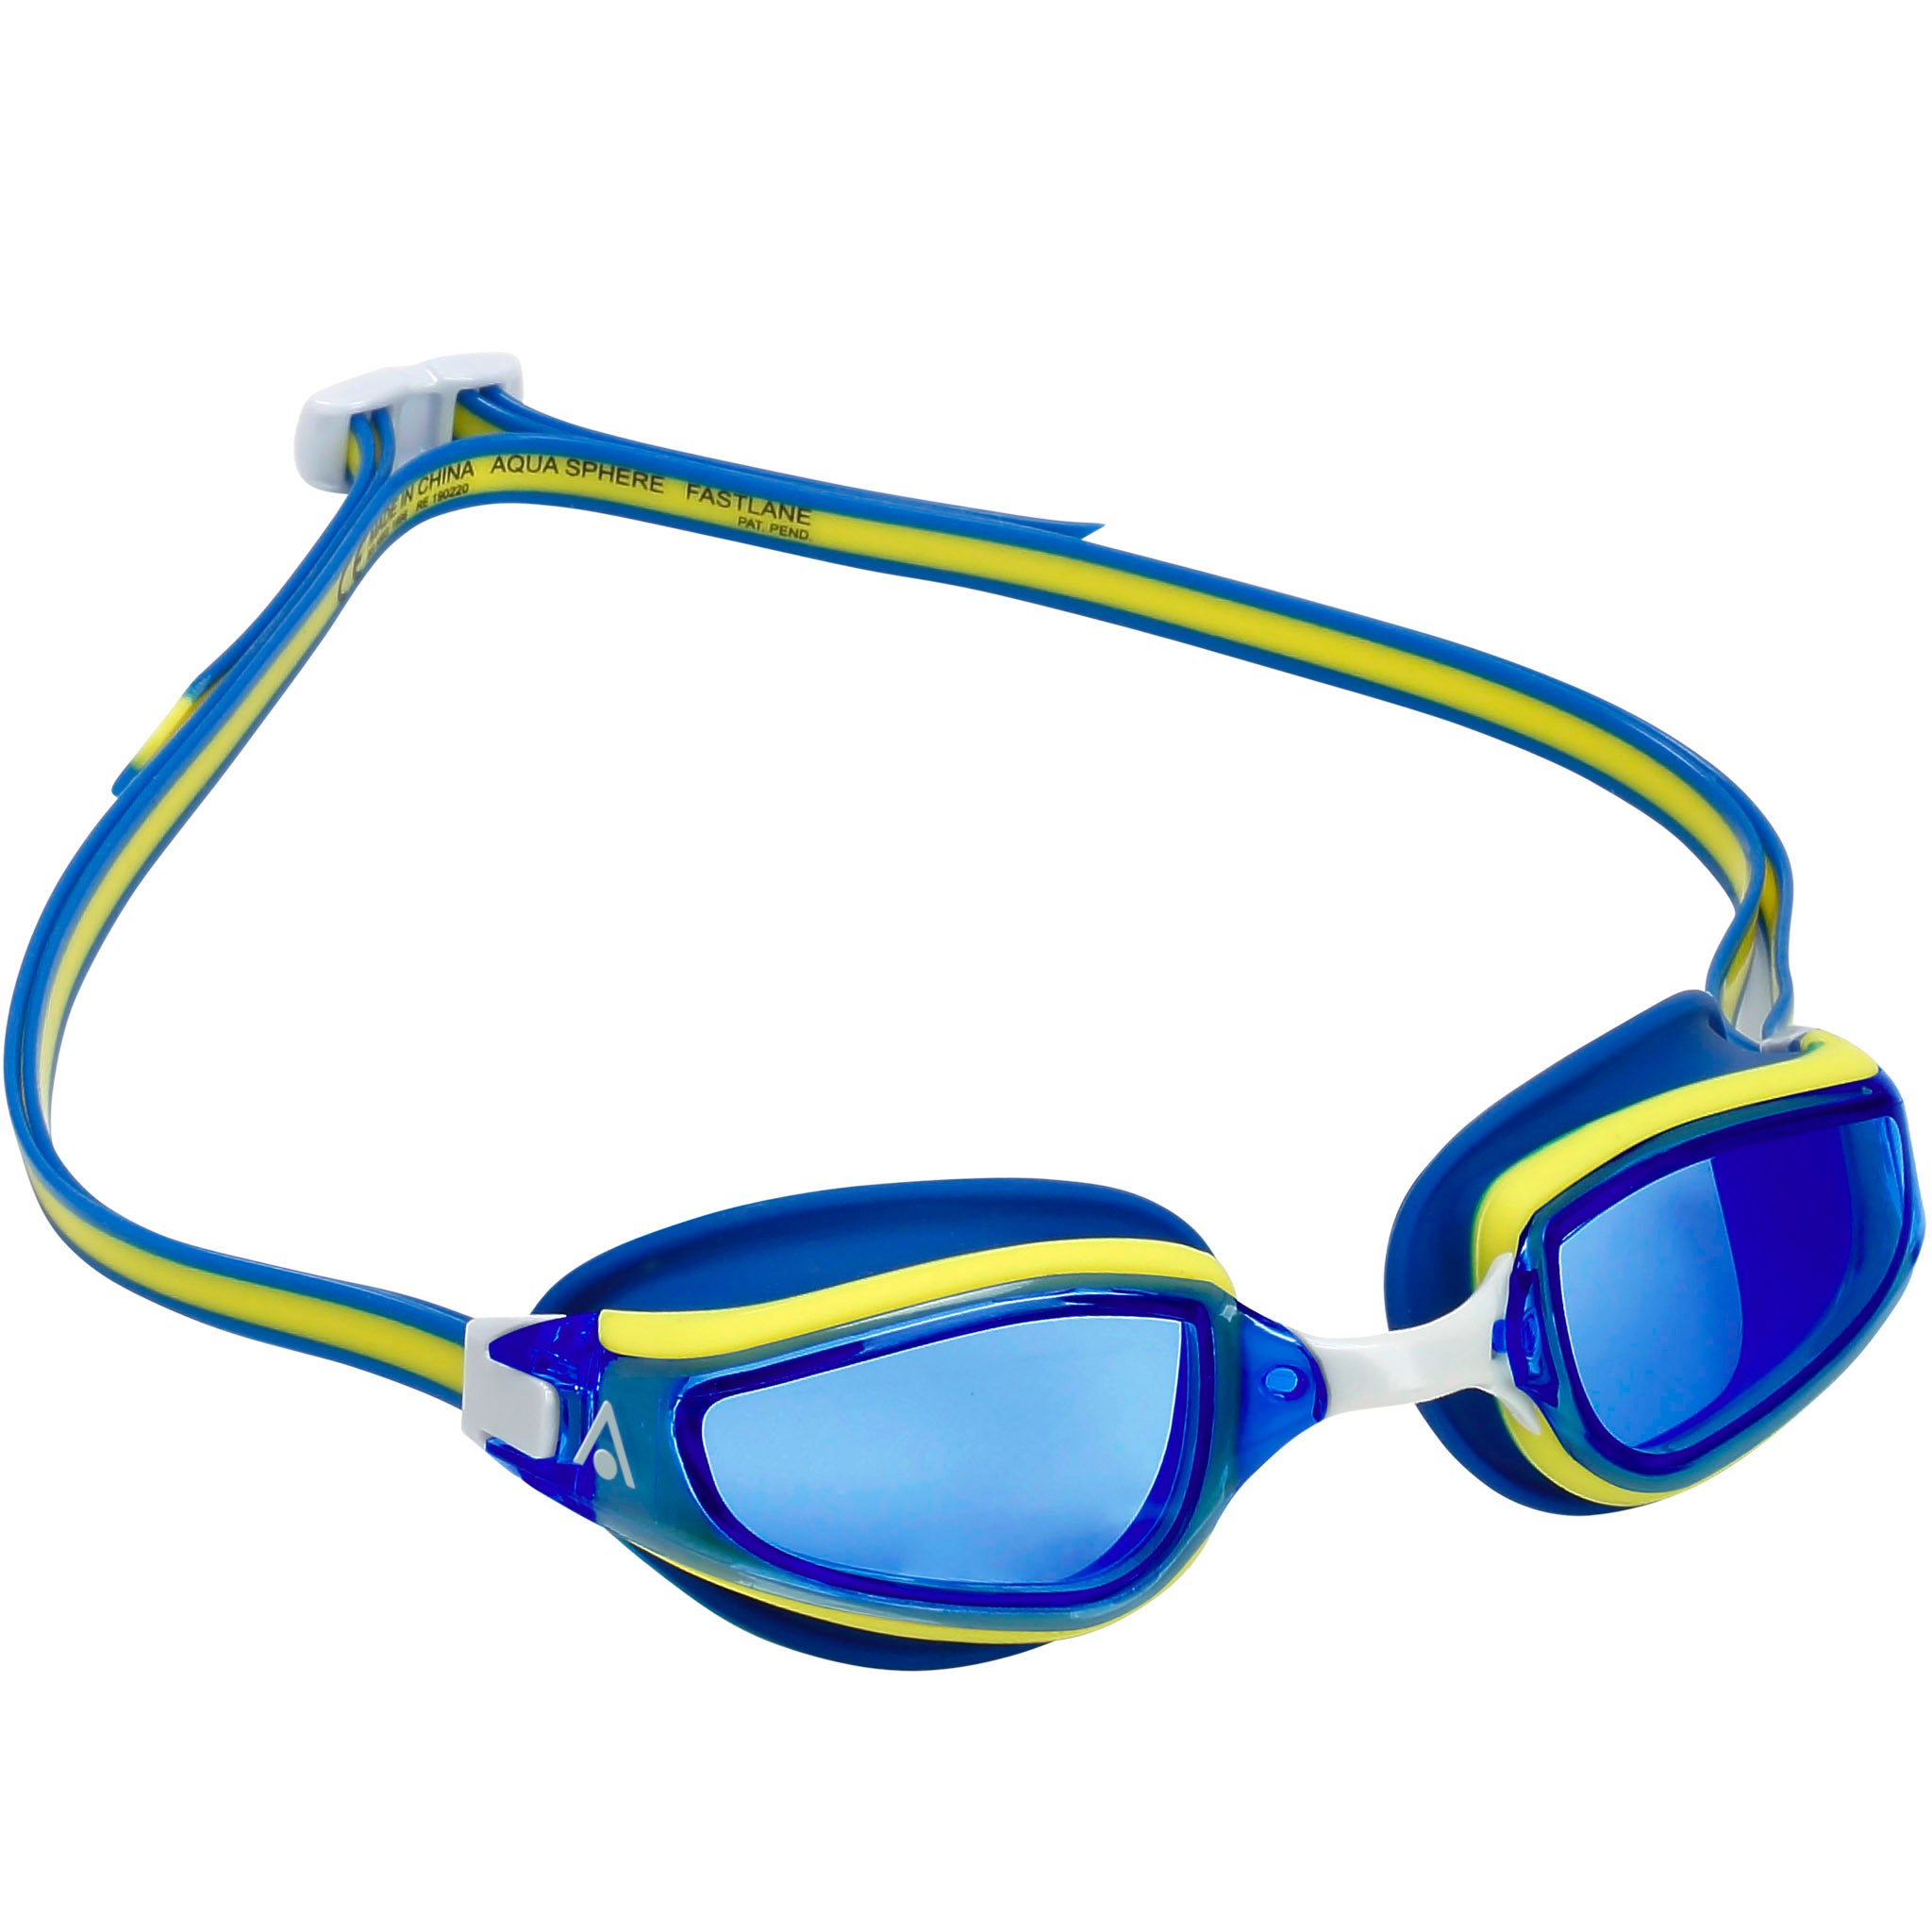 Aquasphere Fastlane Swimming Goggles Blue Tinted Lenses - Side View